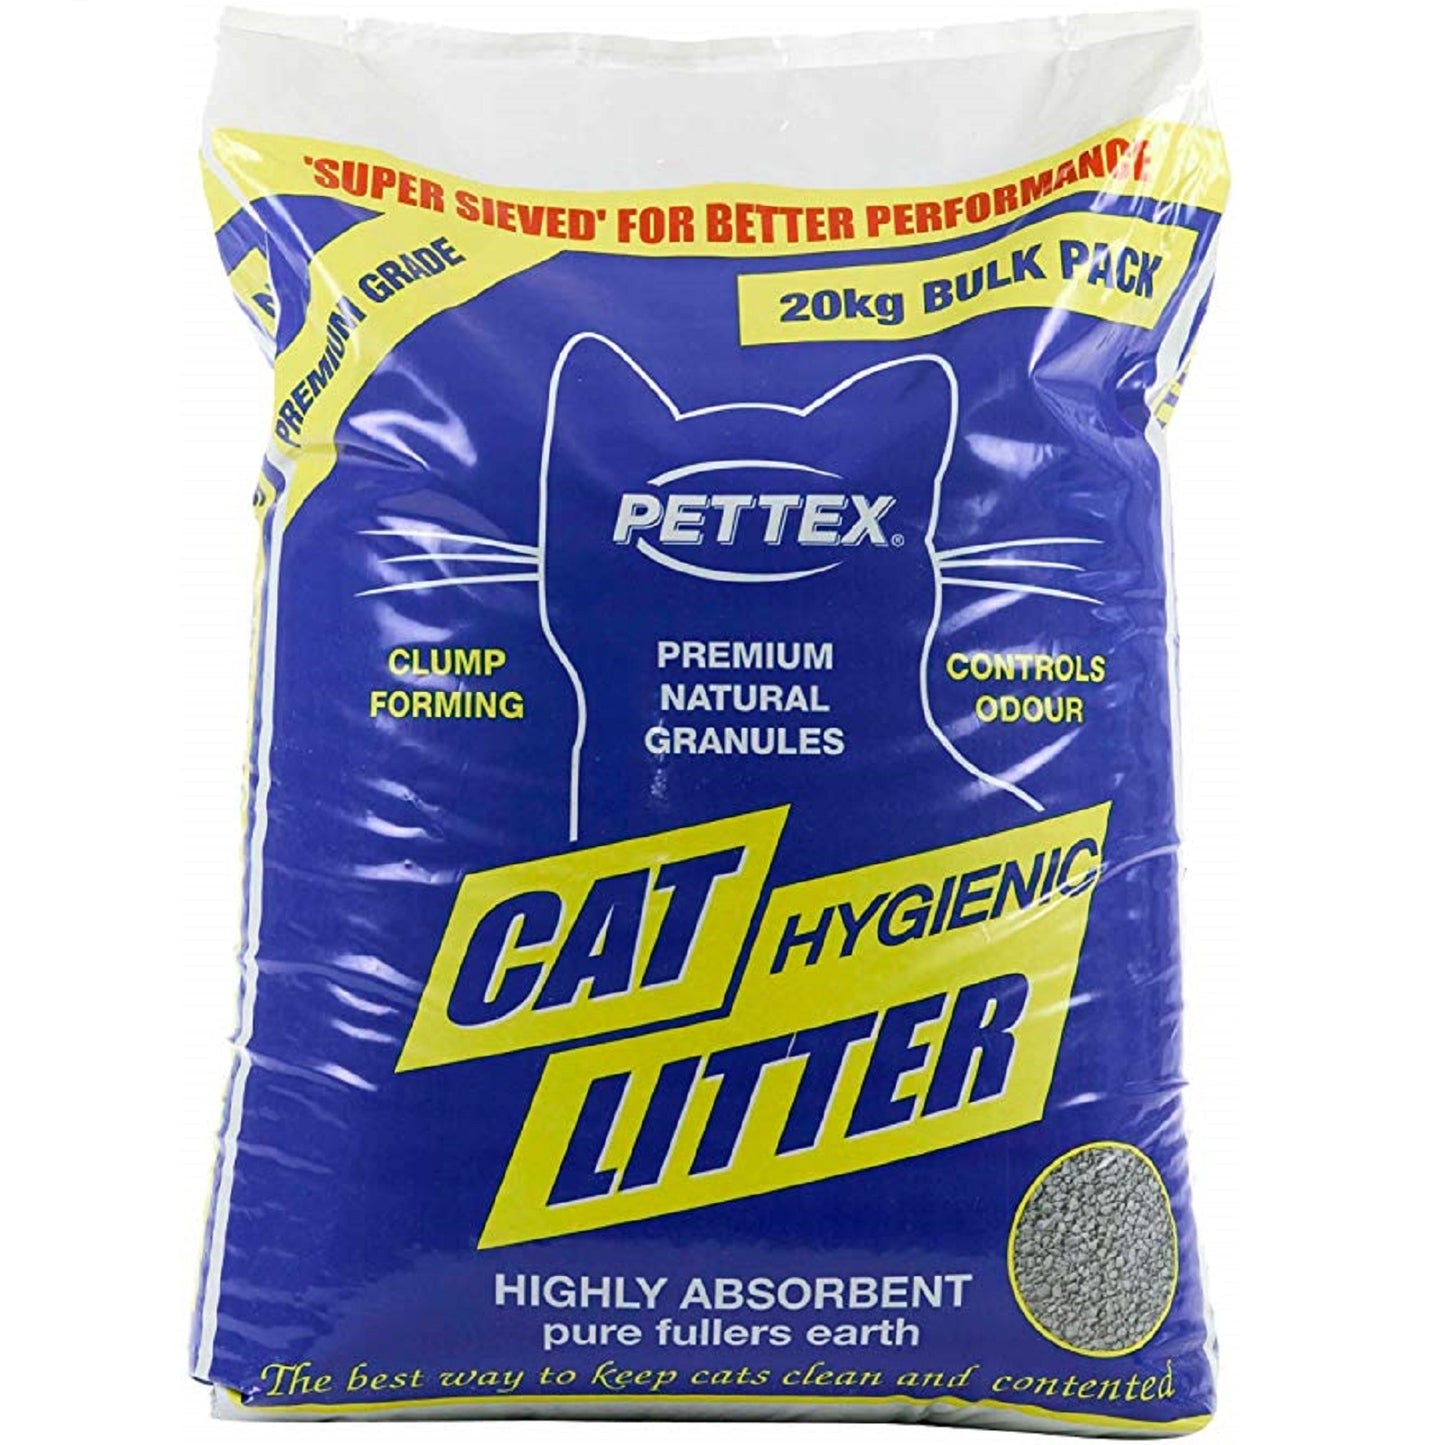 Pettex  - Cat Hygienic Litter